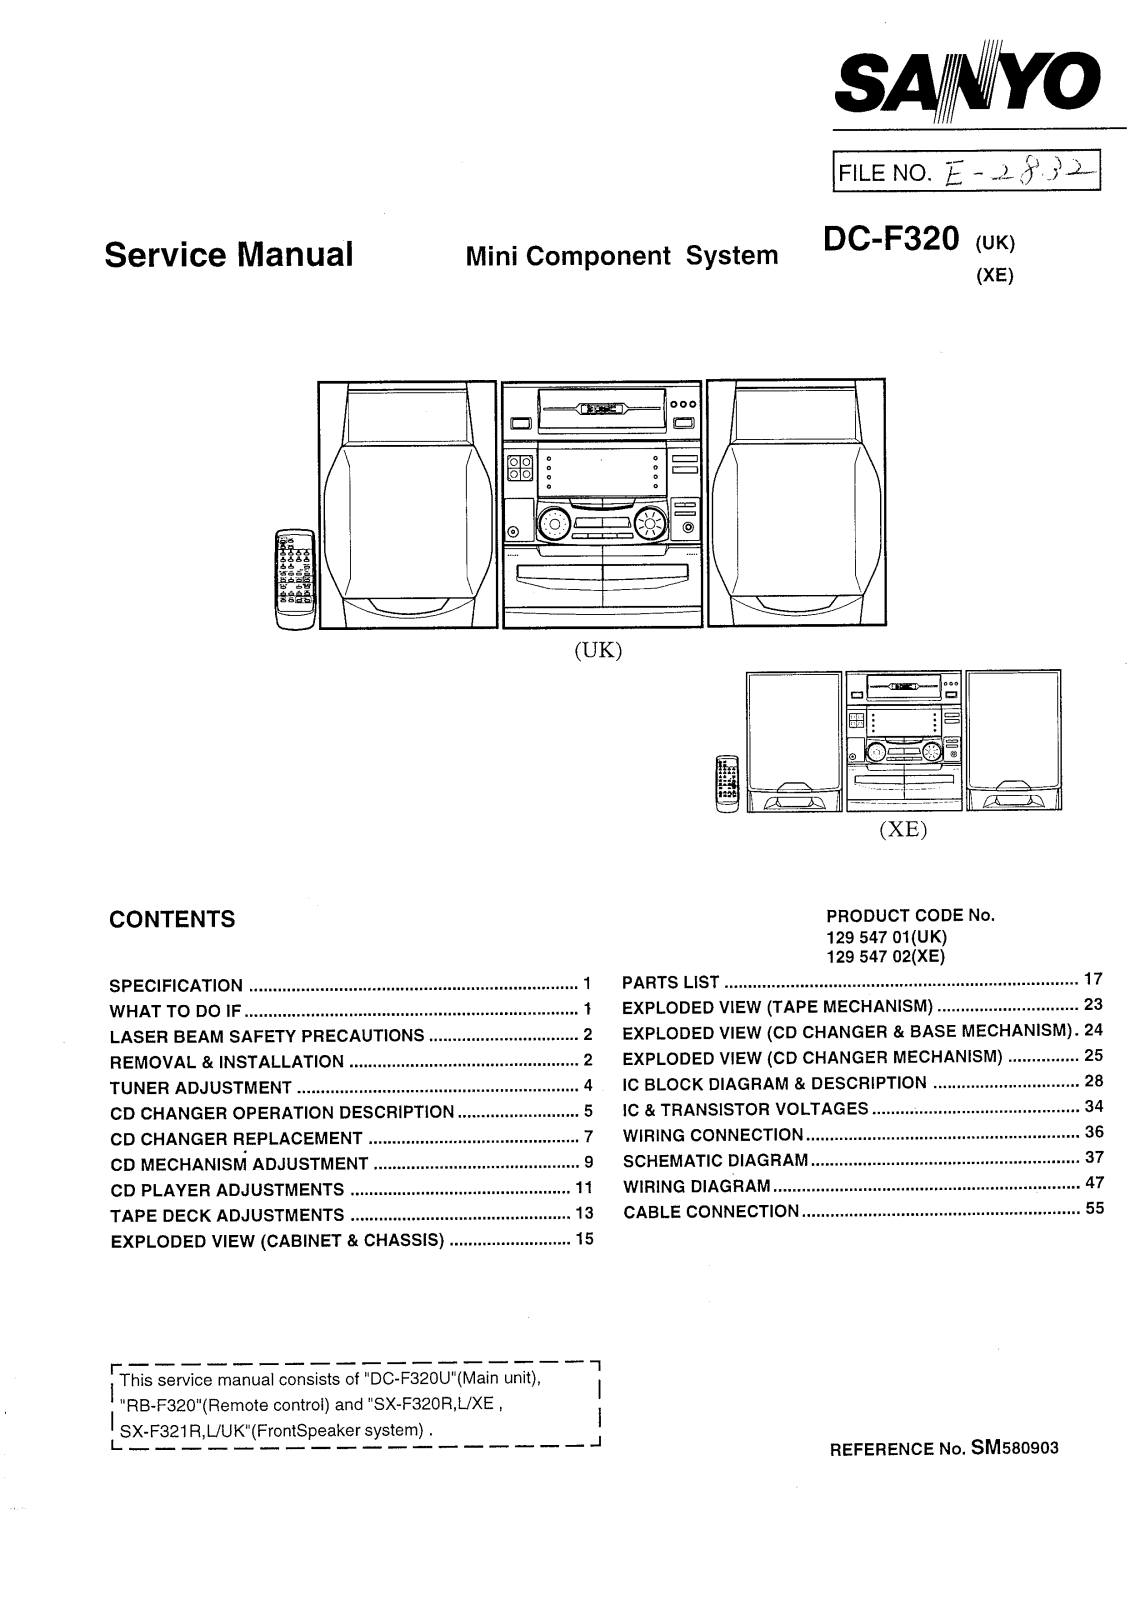 Sanyo DC F320 Service Manual